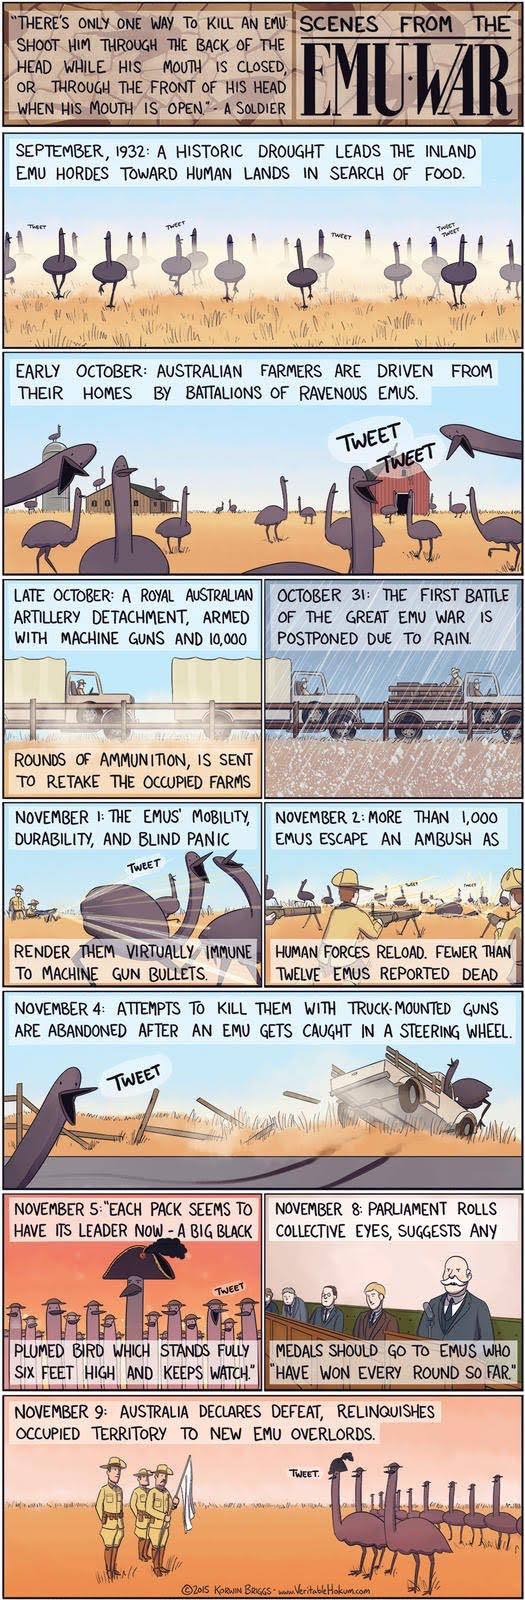 History of the emu wars - meme